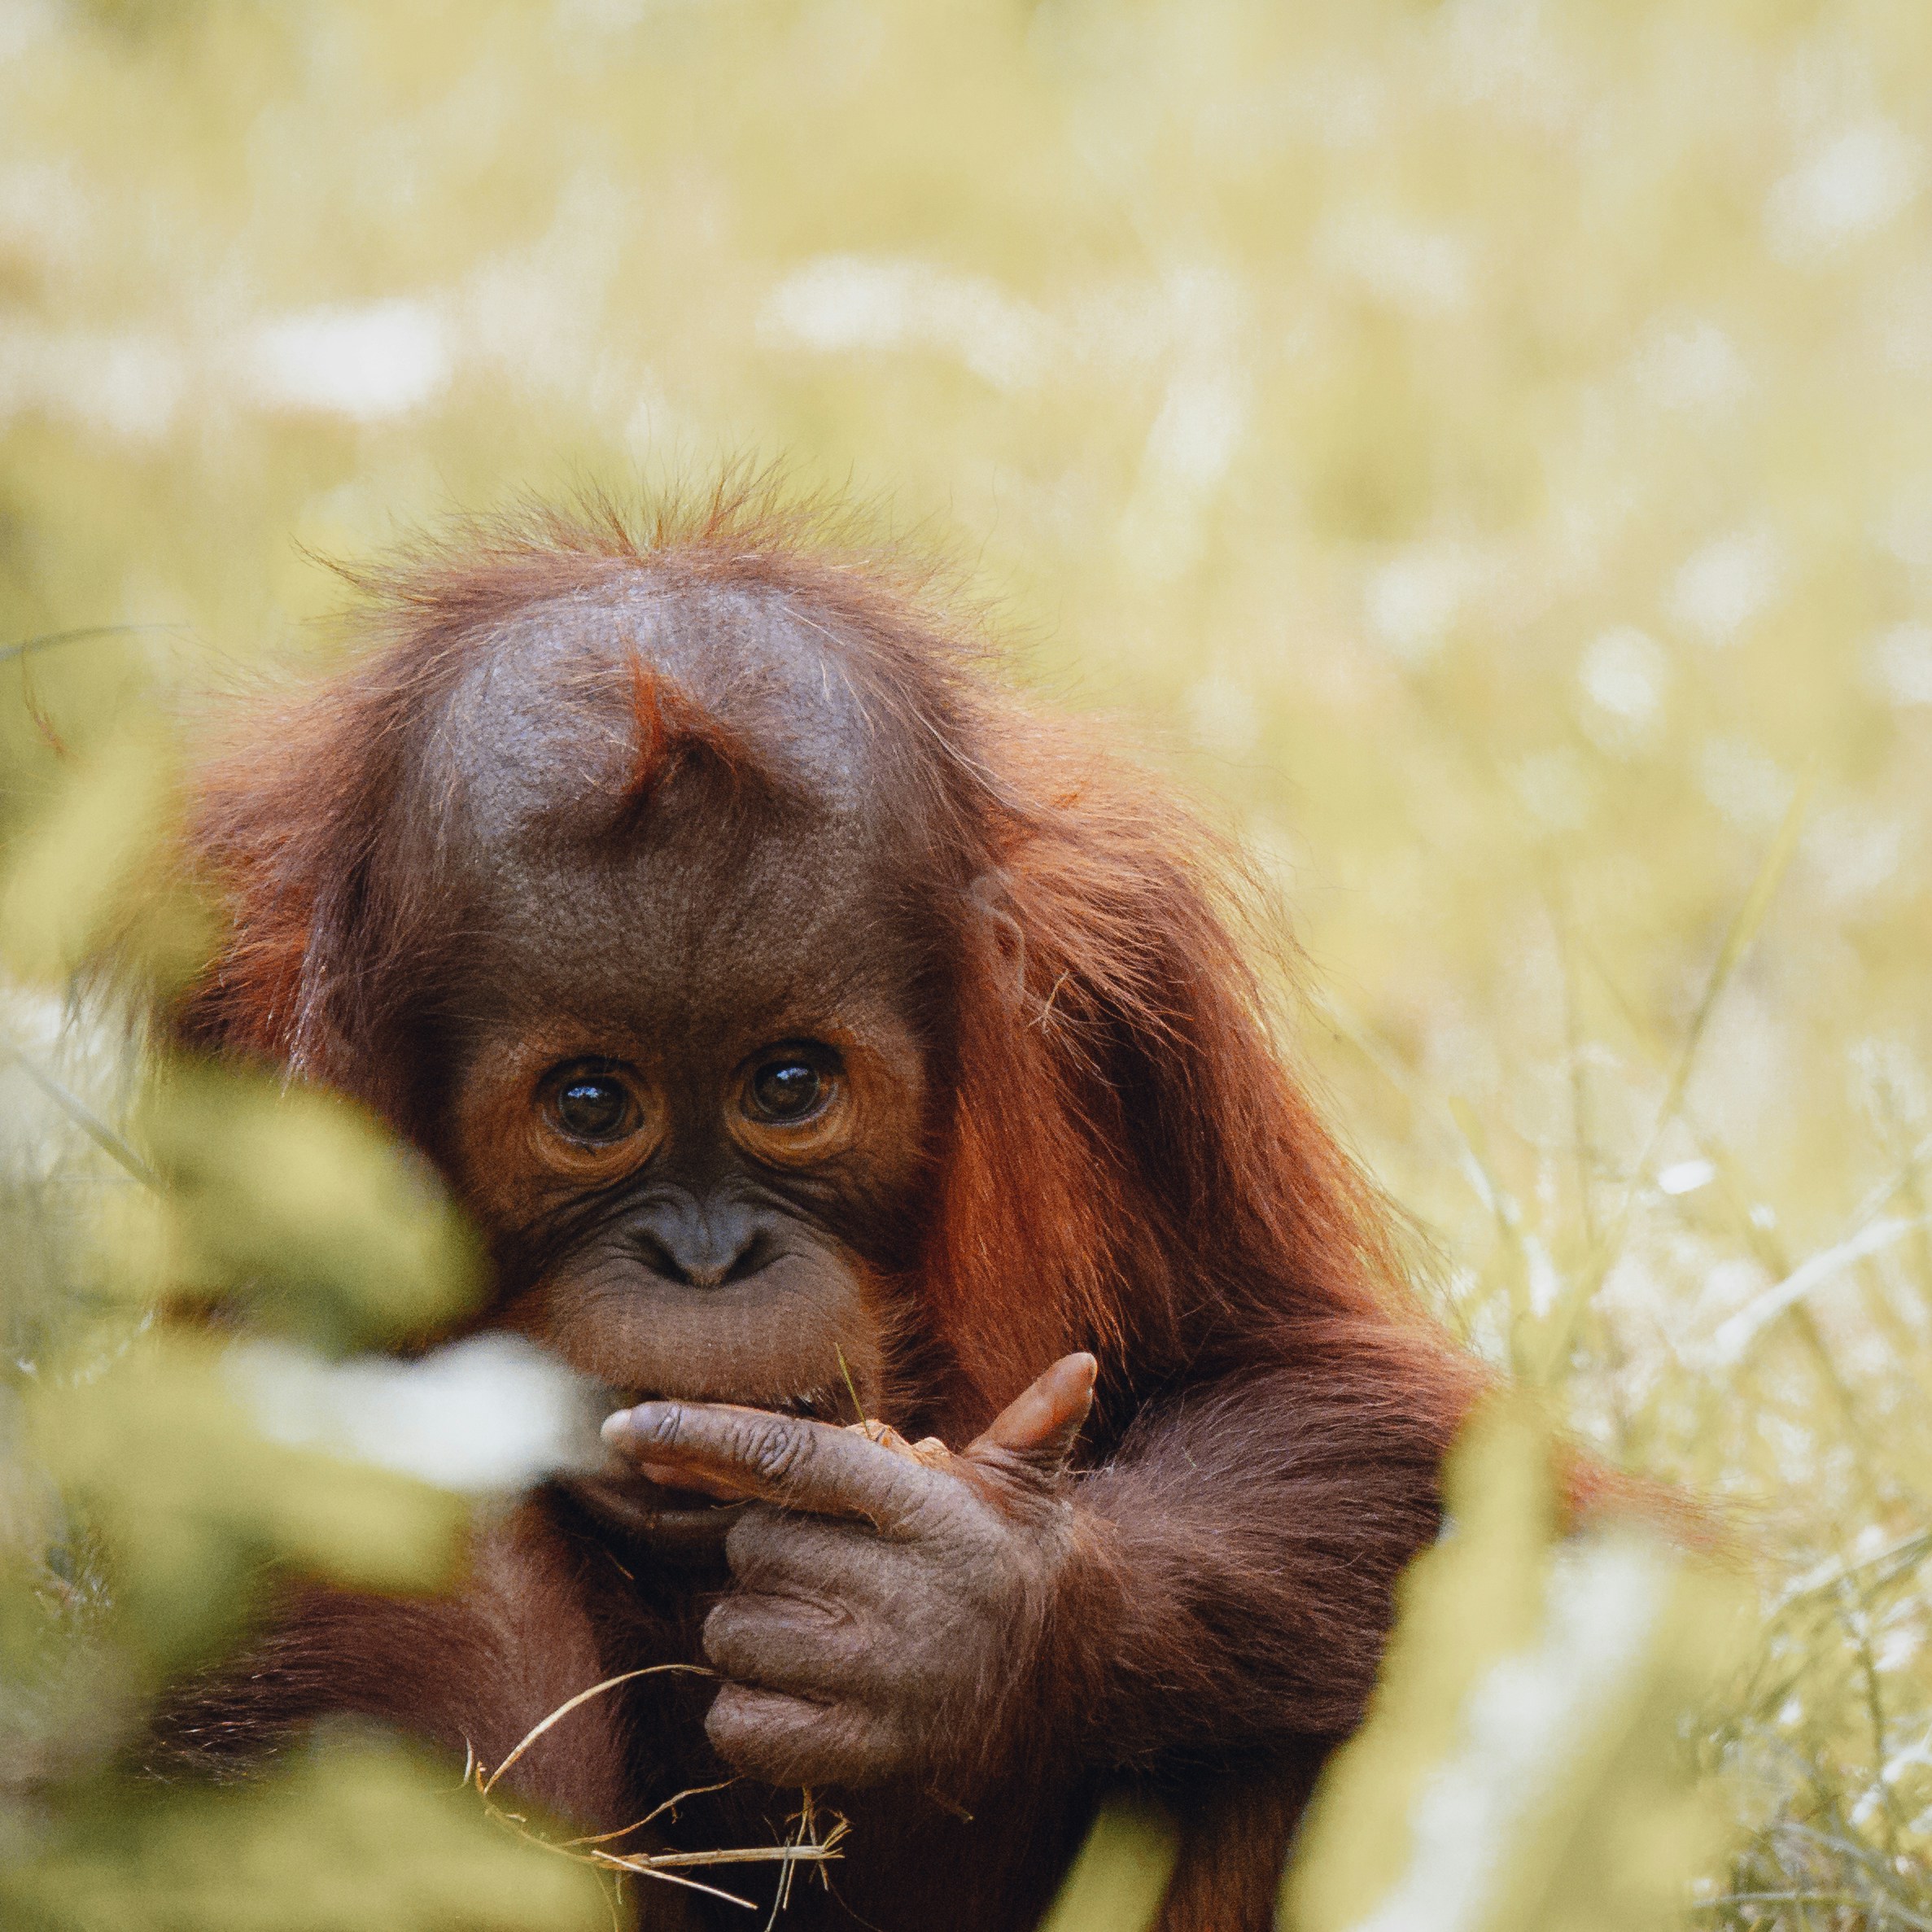 young baby orangutan